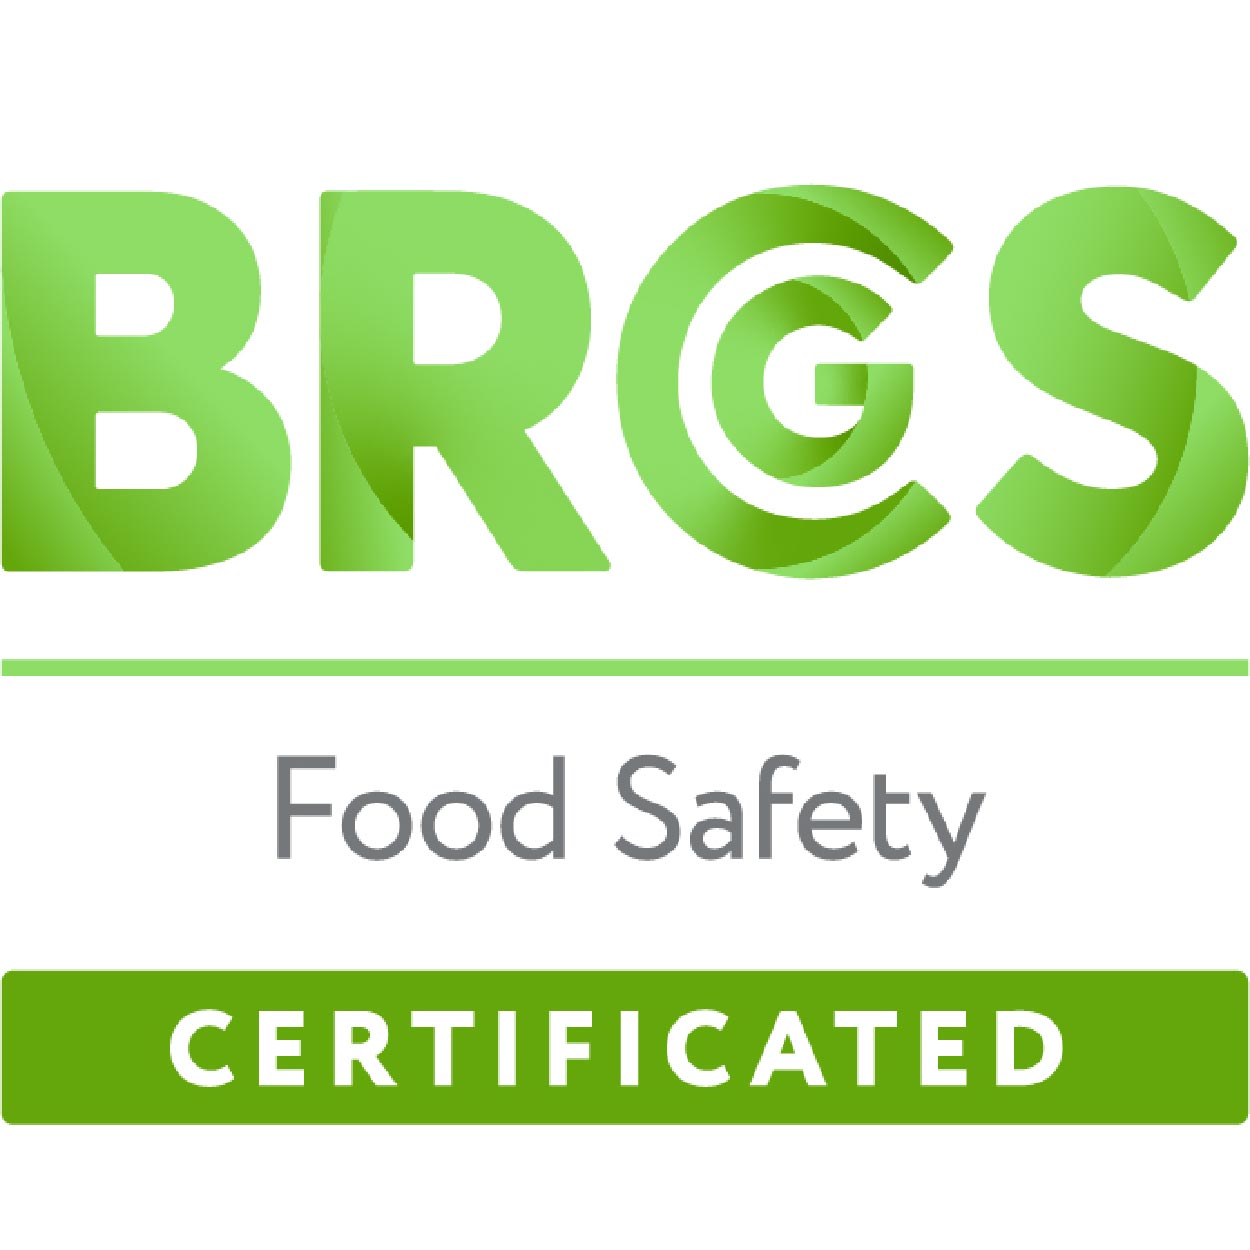 BRCGS Food Safety Global Standard Logo